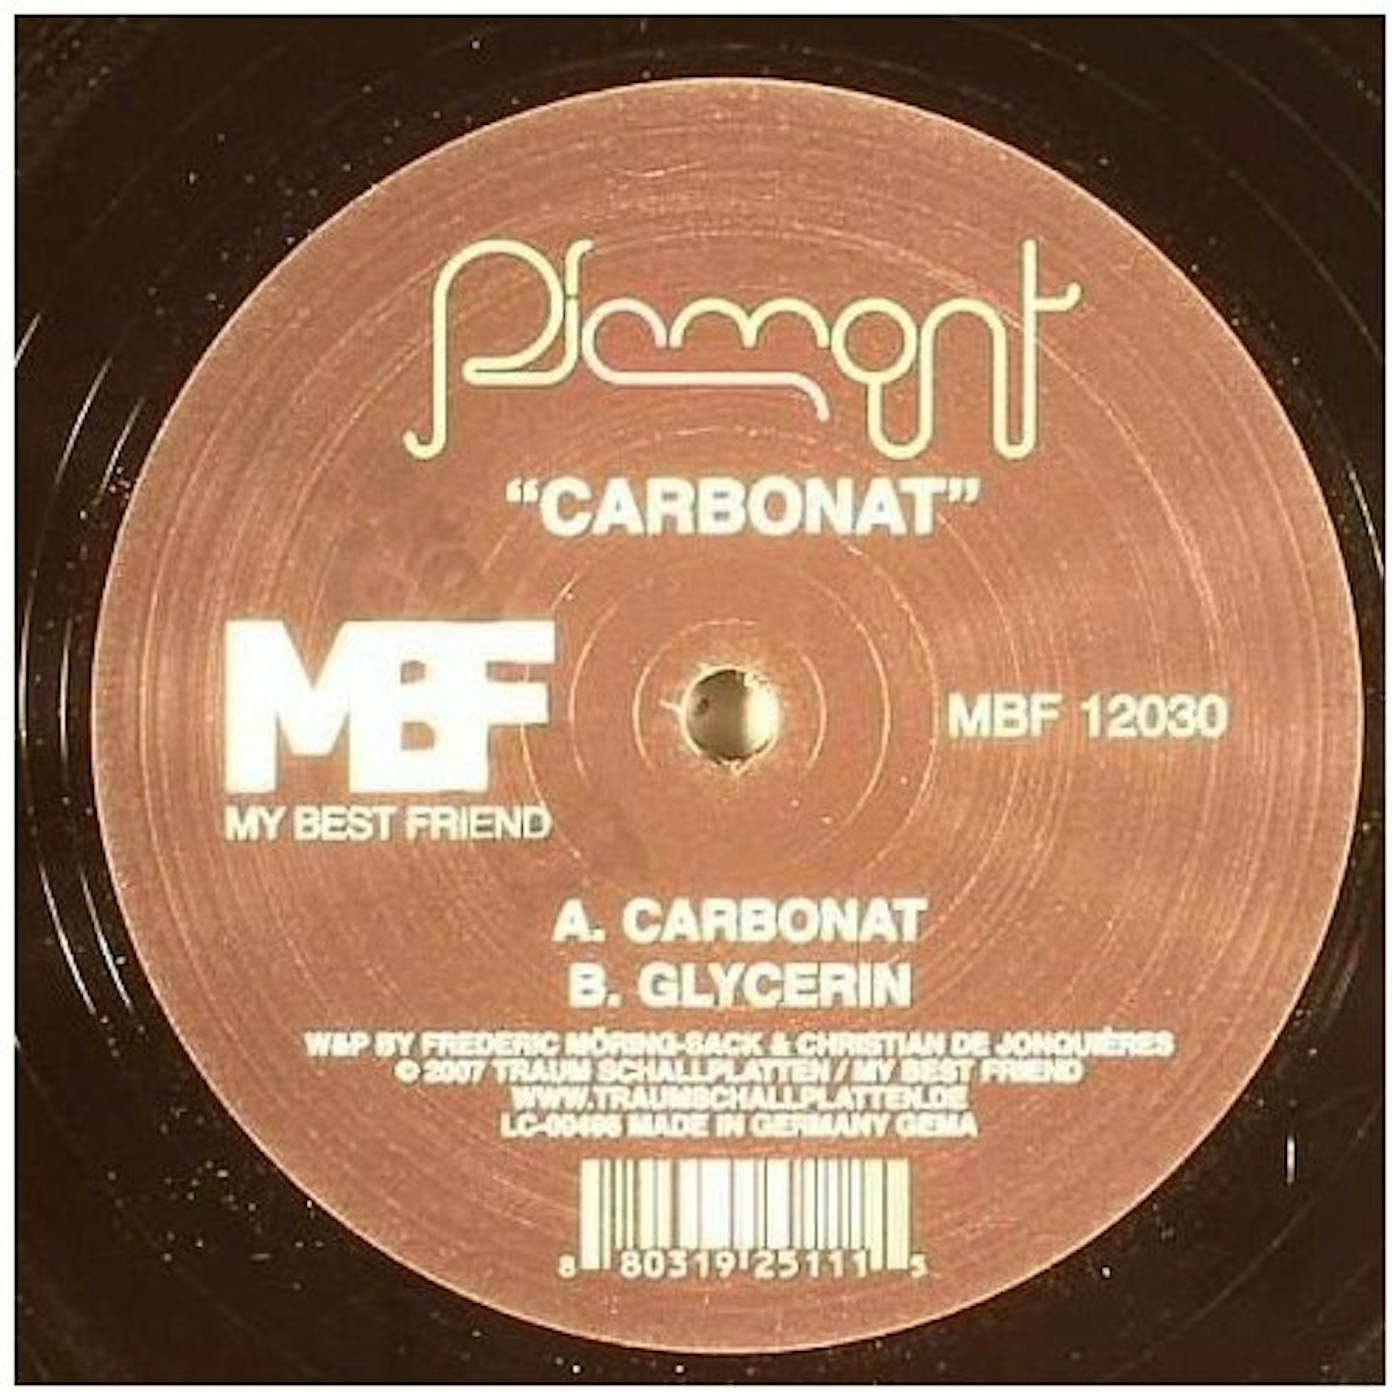 Piemont CARBONAT Vinyl Record